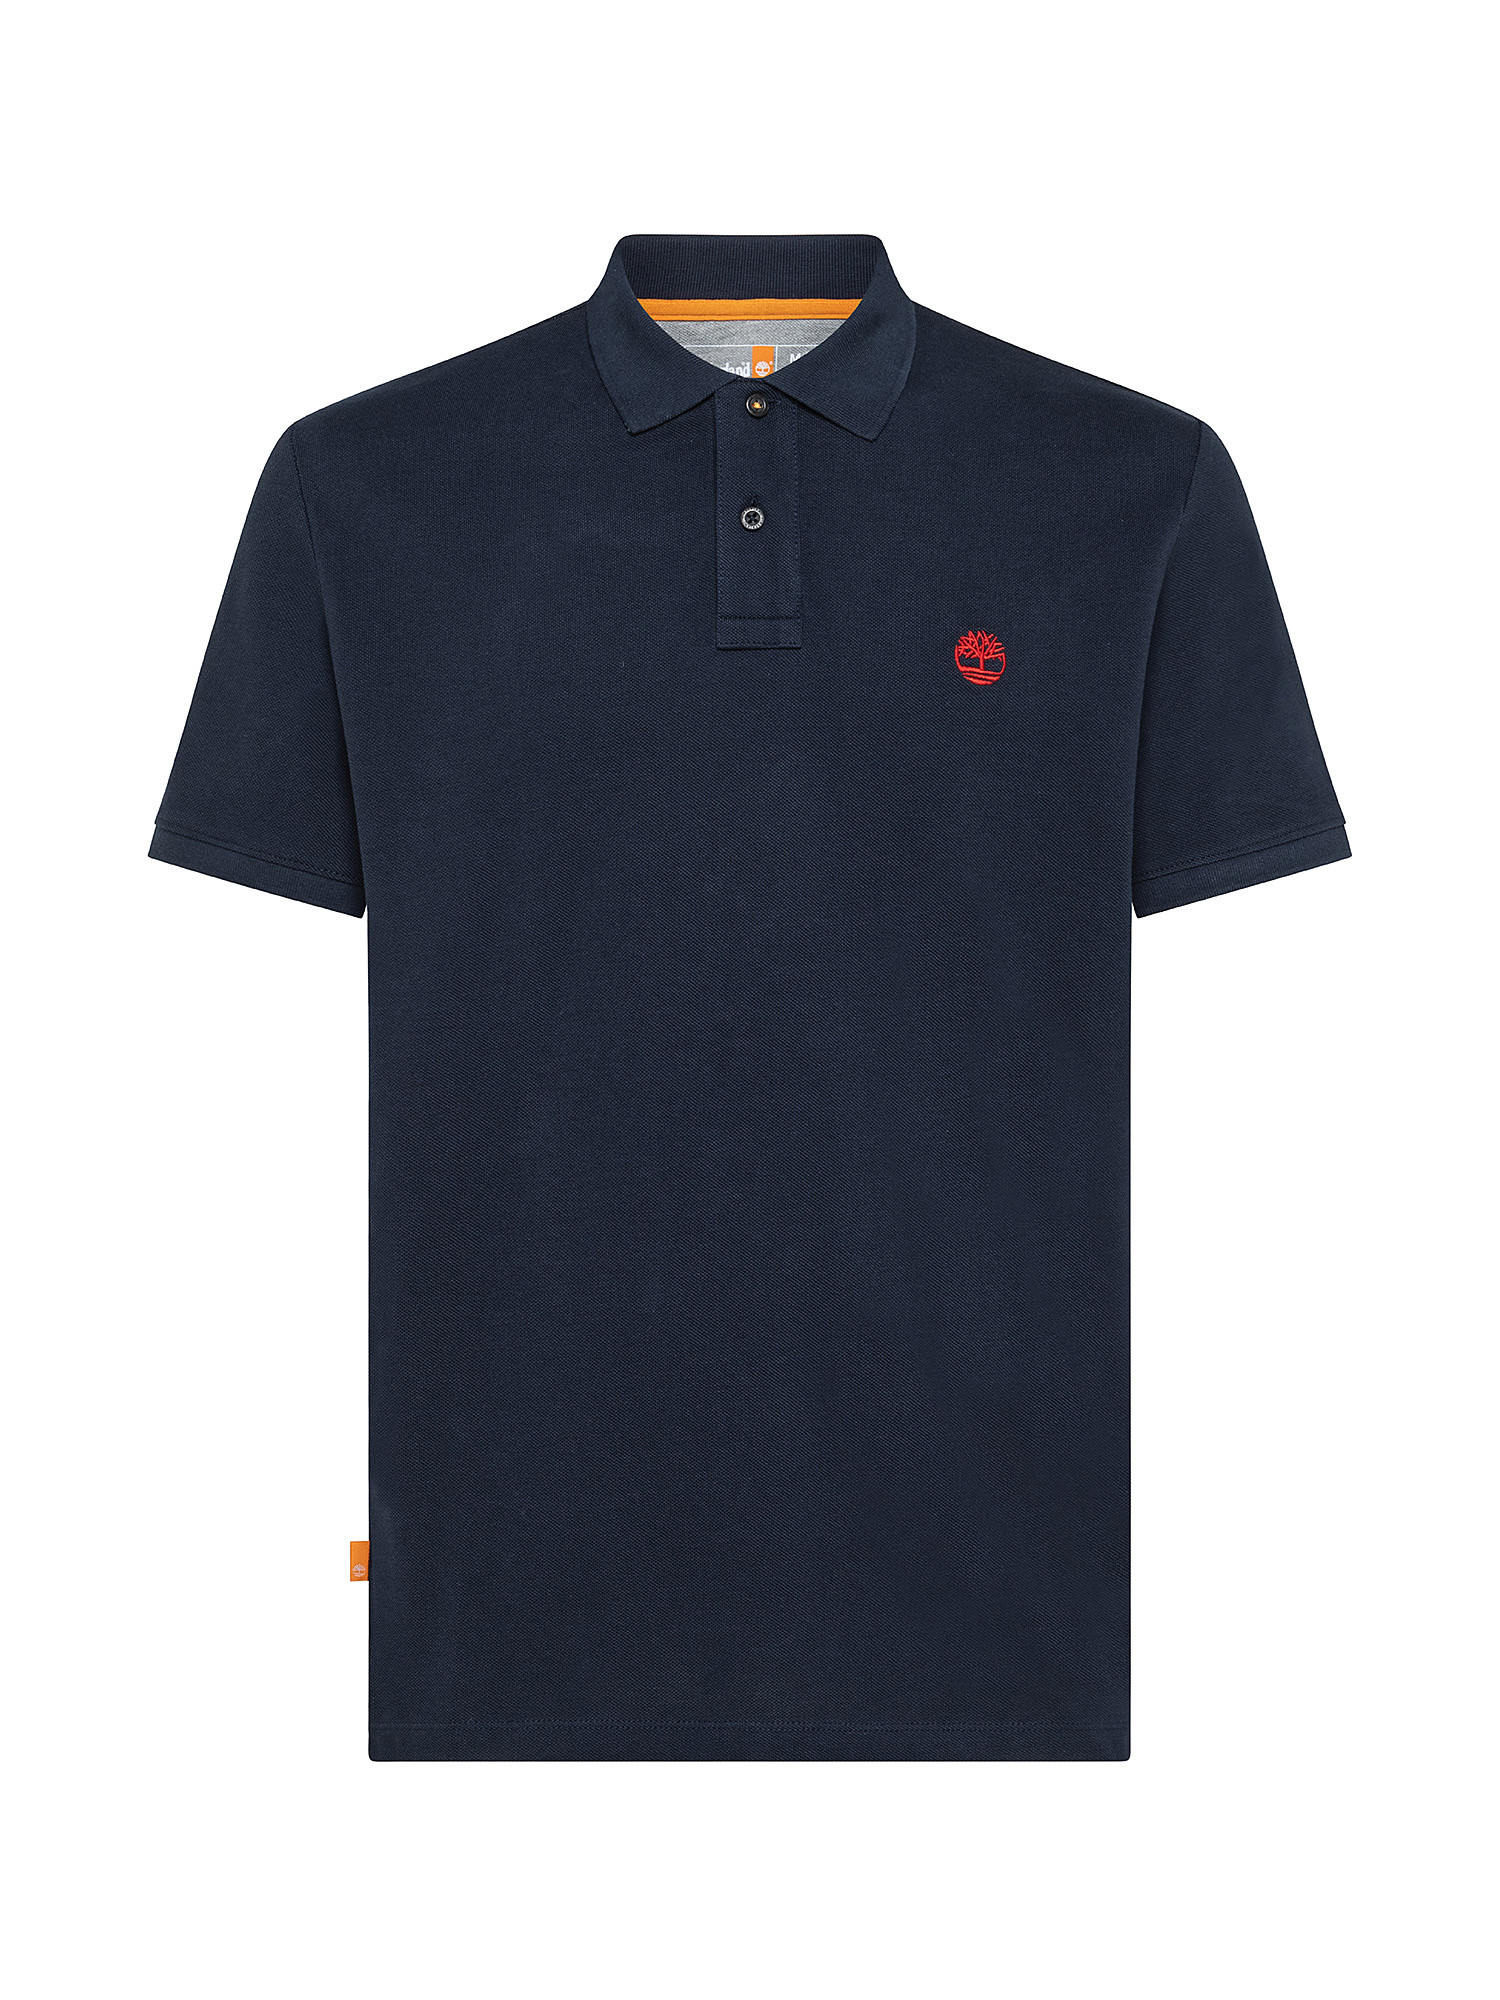 Men's Millers River Piqué Polo Shirt, Blue, large image number 0